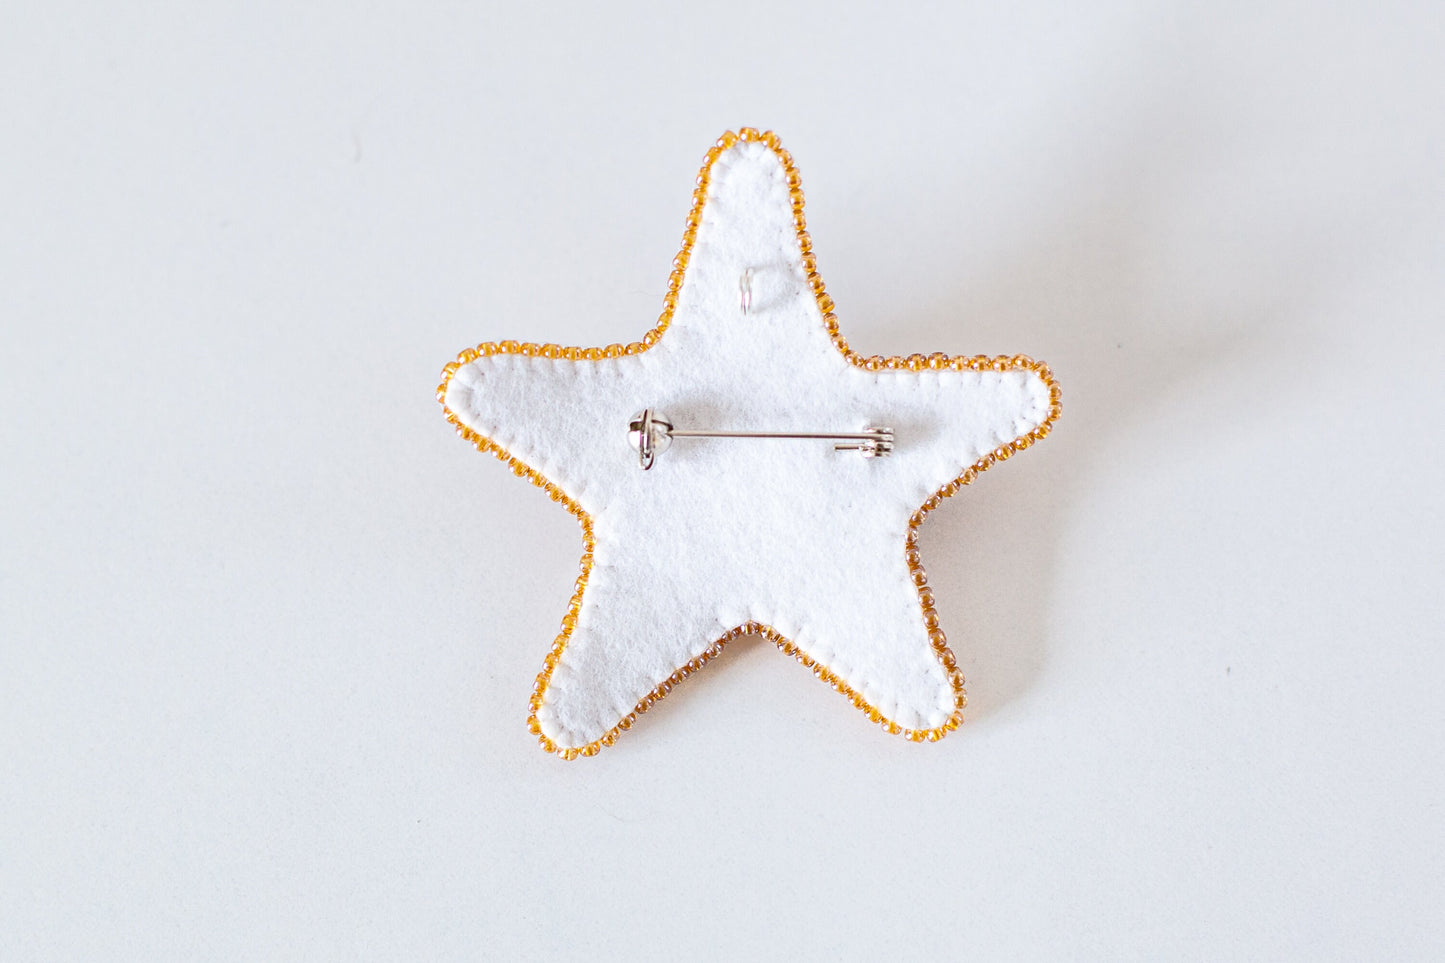 Starfish Bead embroidery kit. Seed Bead Brooch kit. DIY Craft kit. Beadweaving Kit. Needlework beading. Handmade Jewelry Making Kit